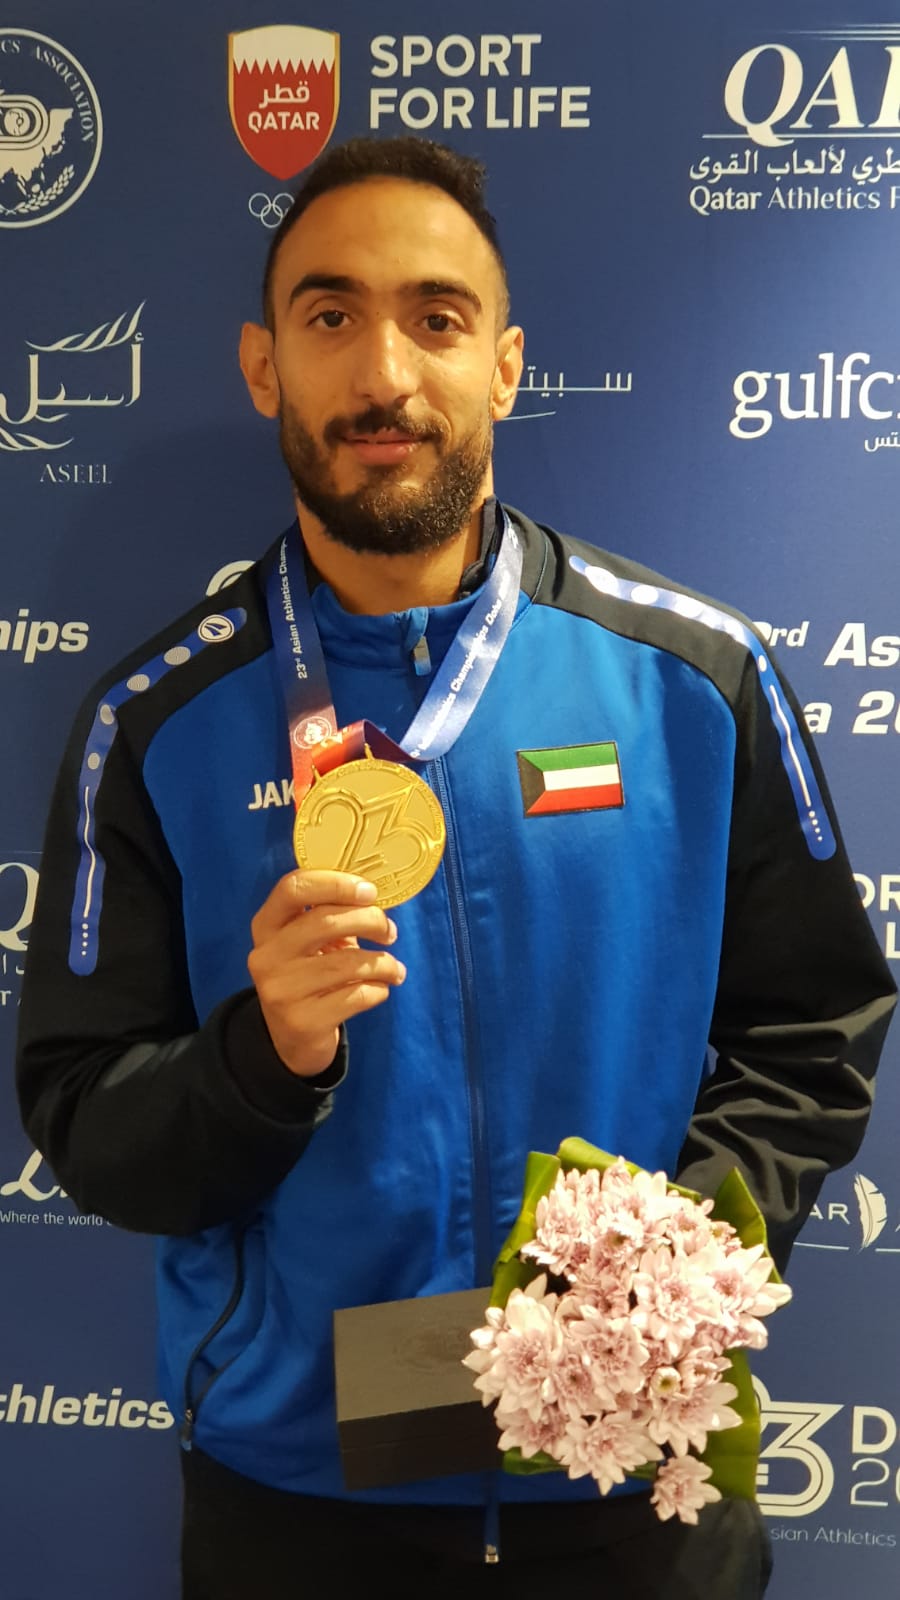 Kuwait's sprinter Yousef Karam